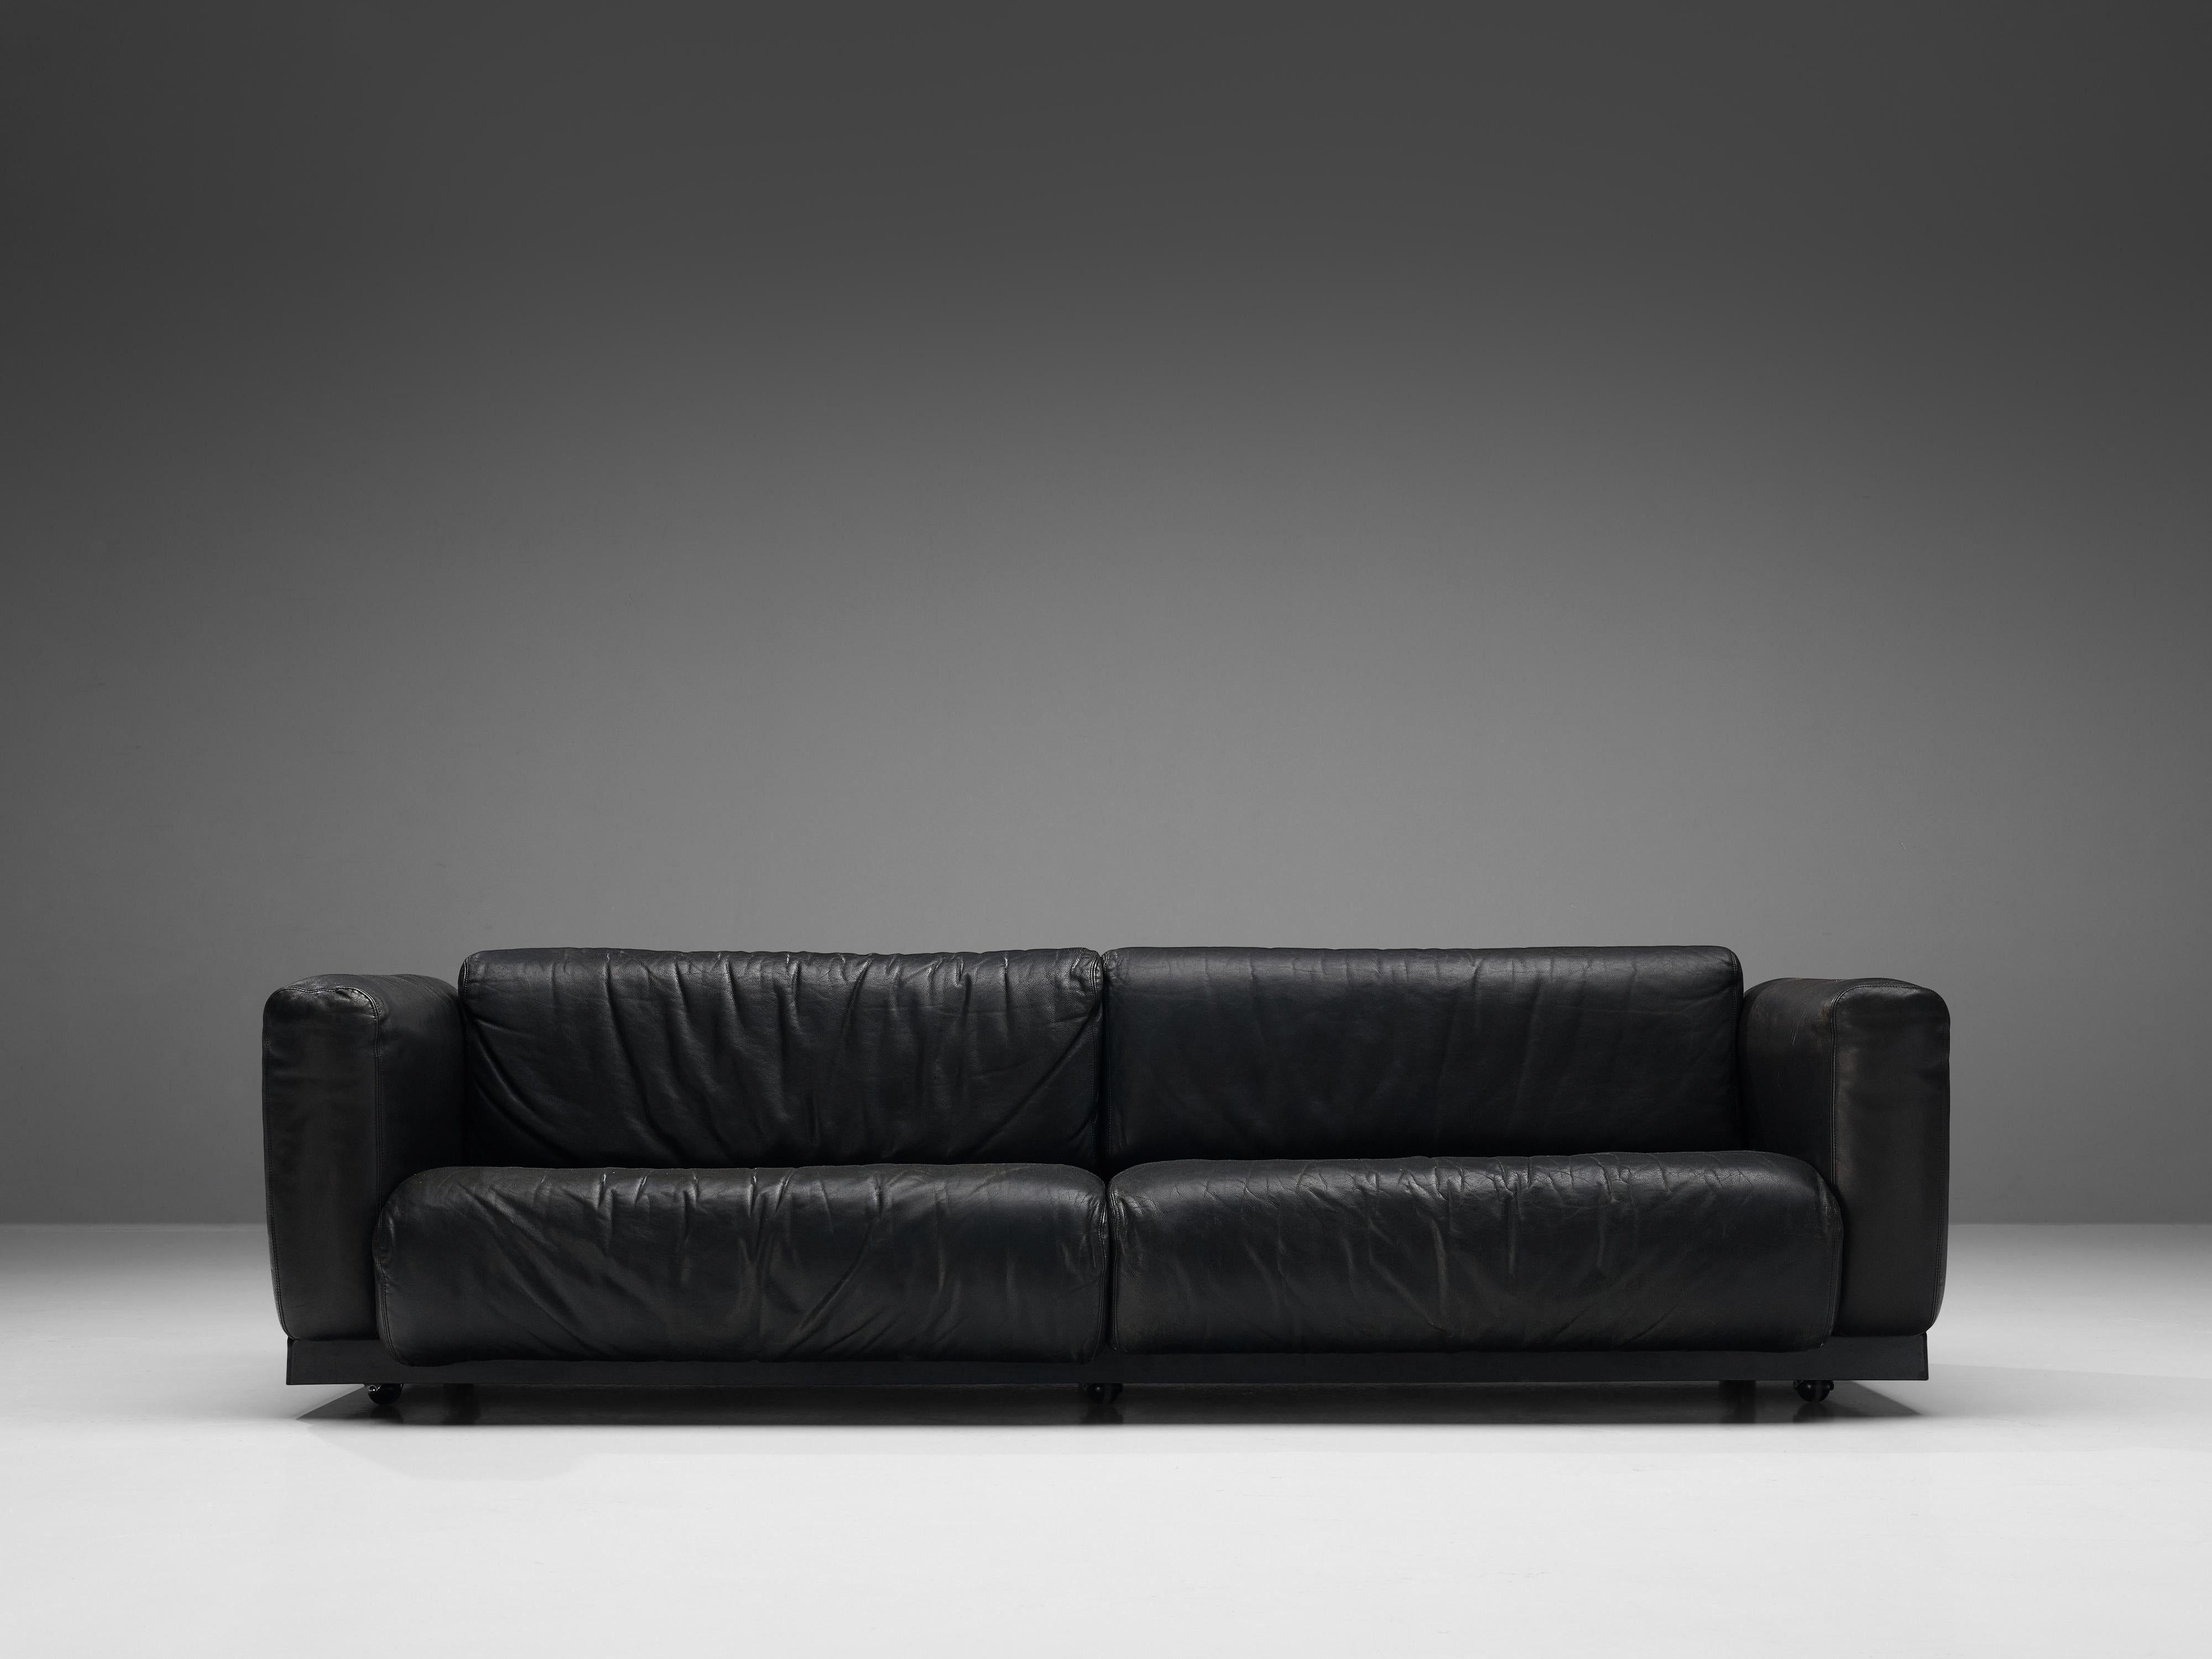 Cini Boeri for Knoll Sofa ‘Gradual’ in Black Leather